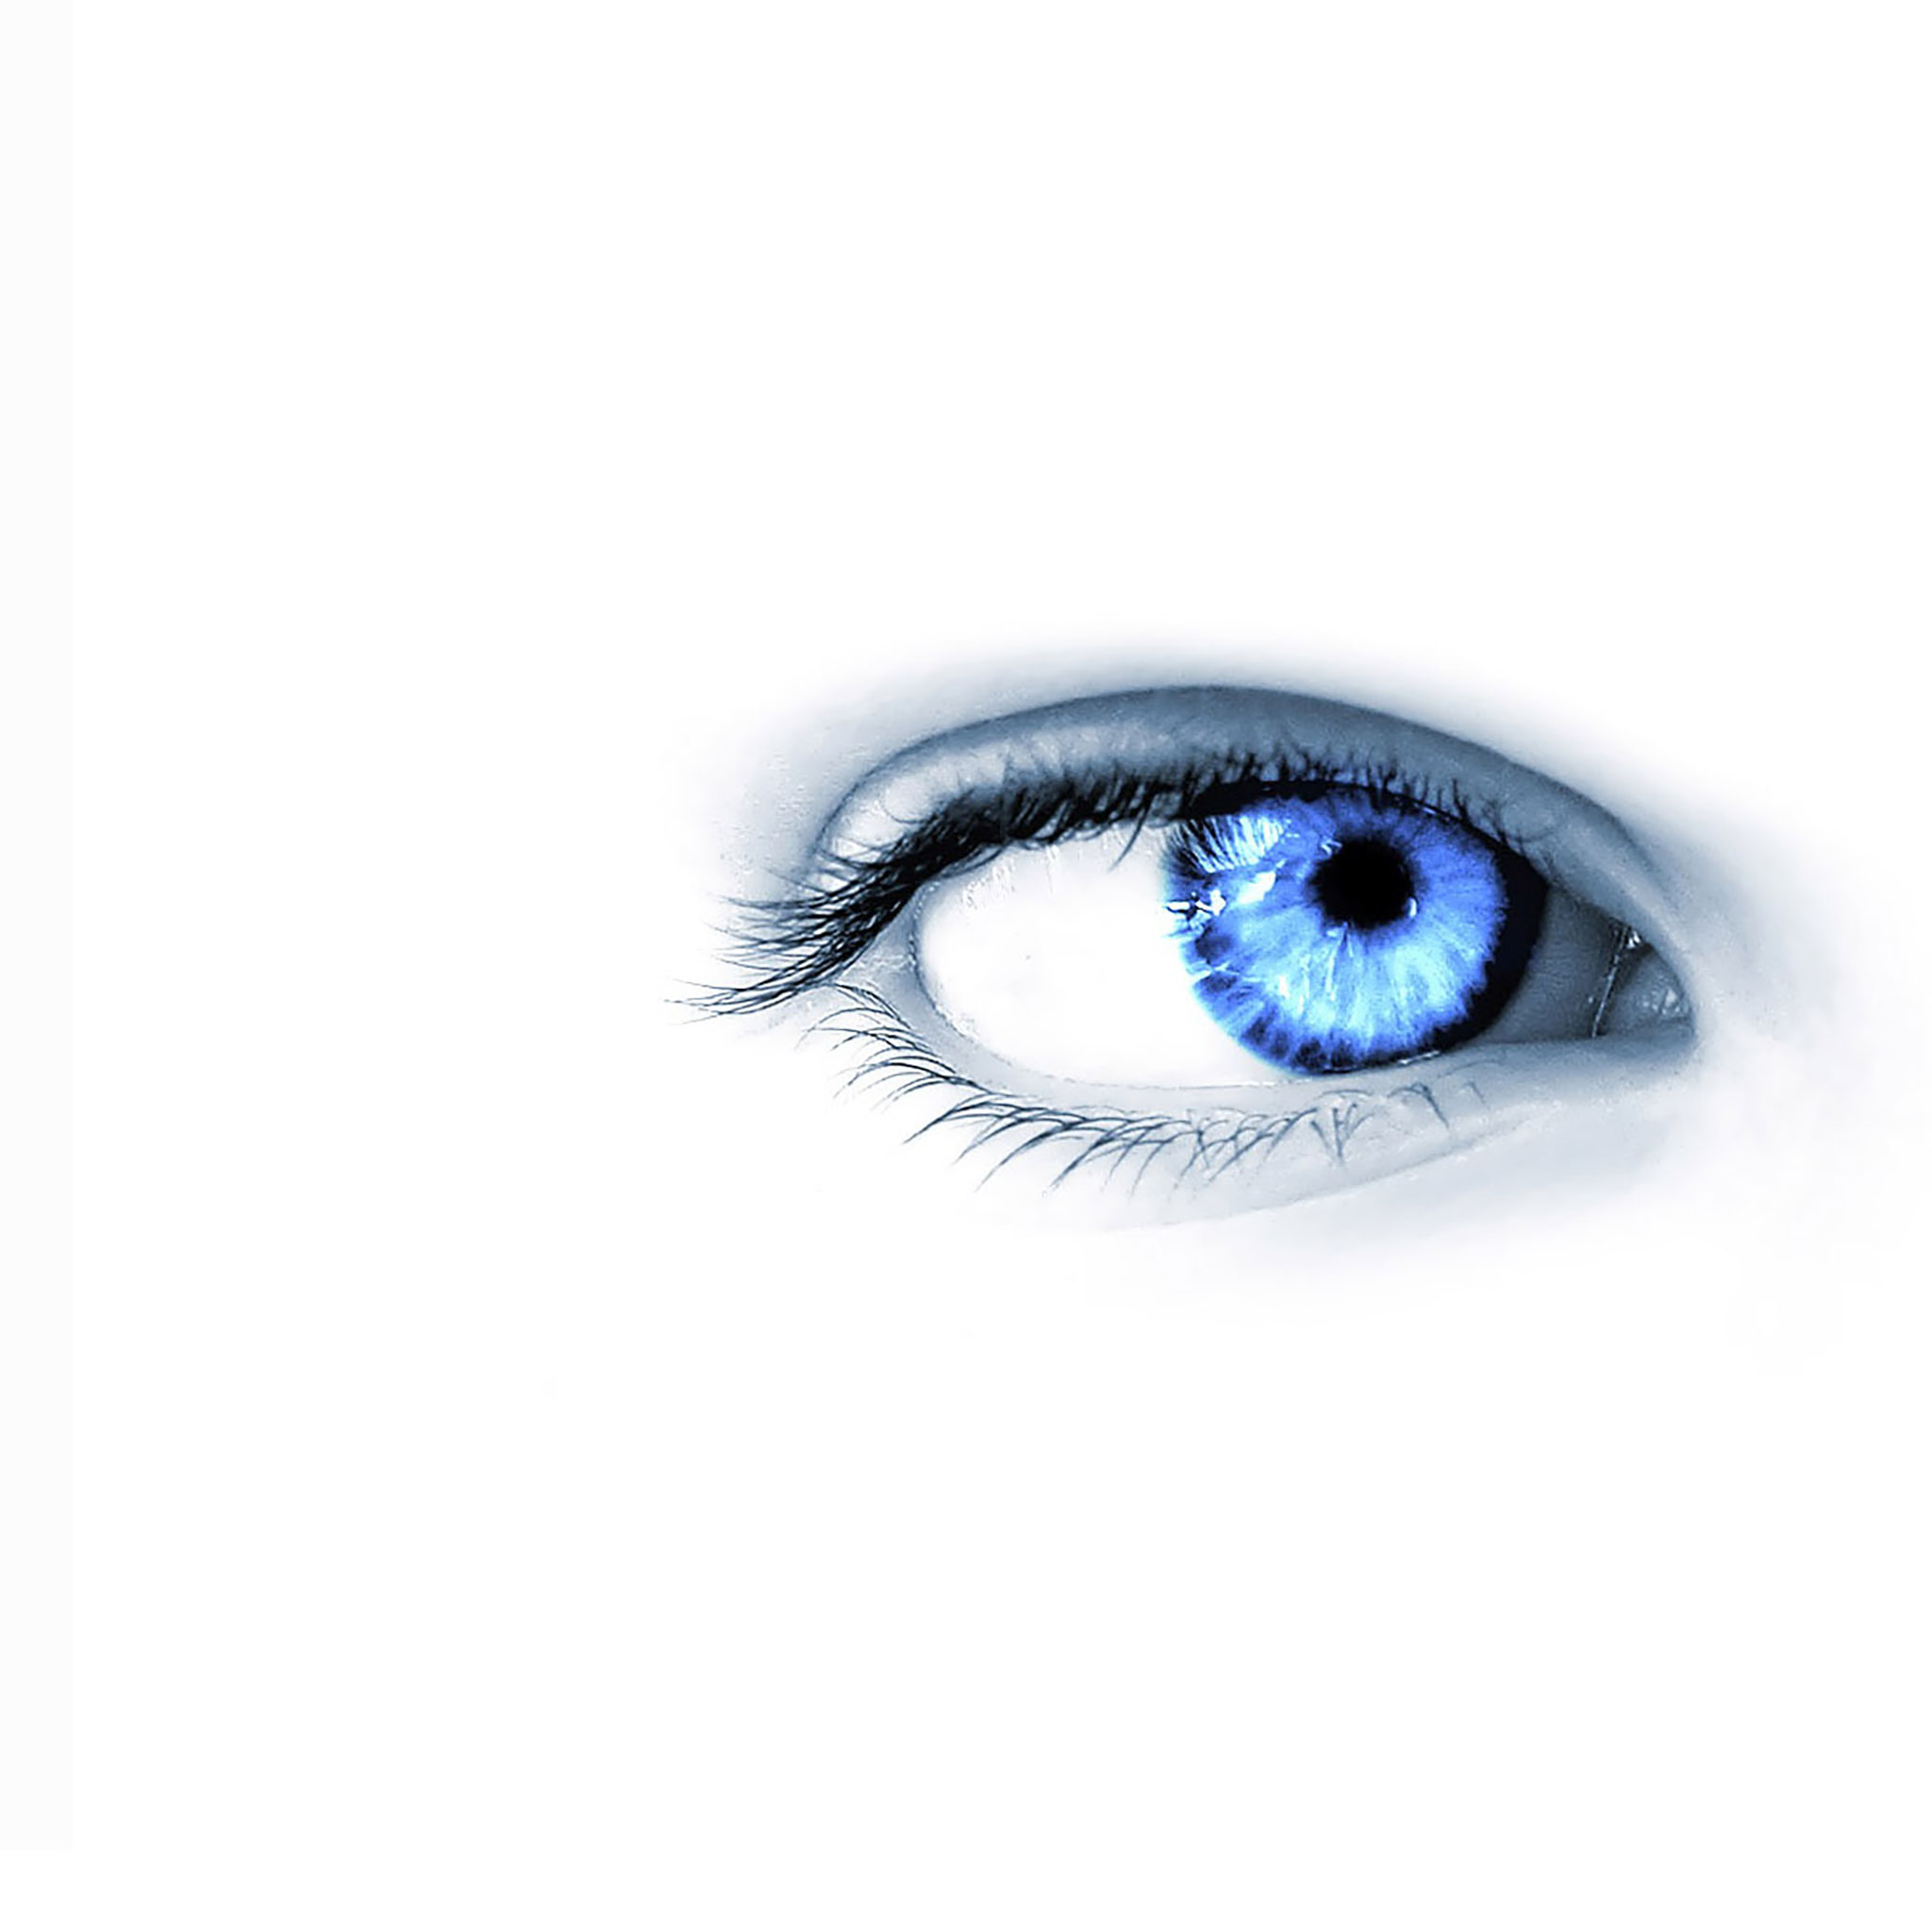 fond d'écran ipad blanc,œil,bleu,cil,sourcil,iris